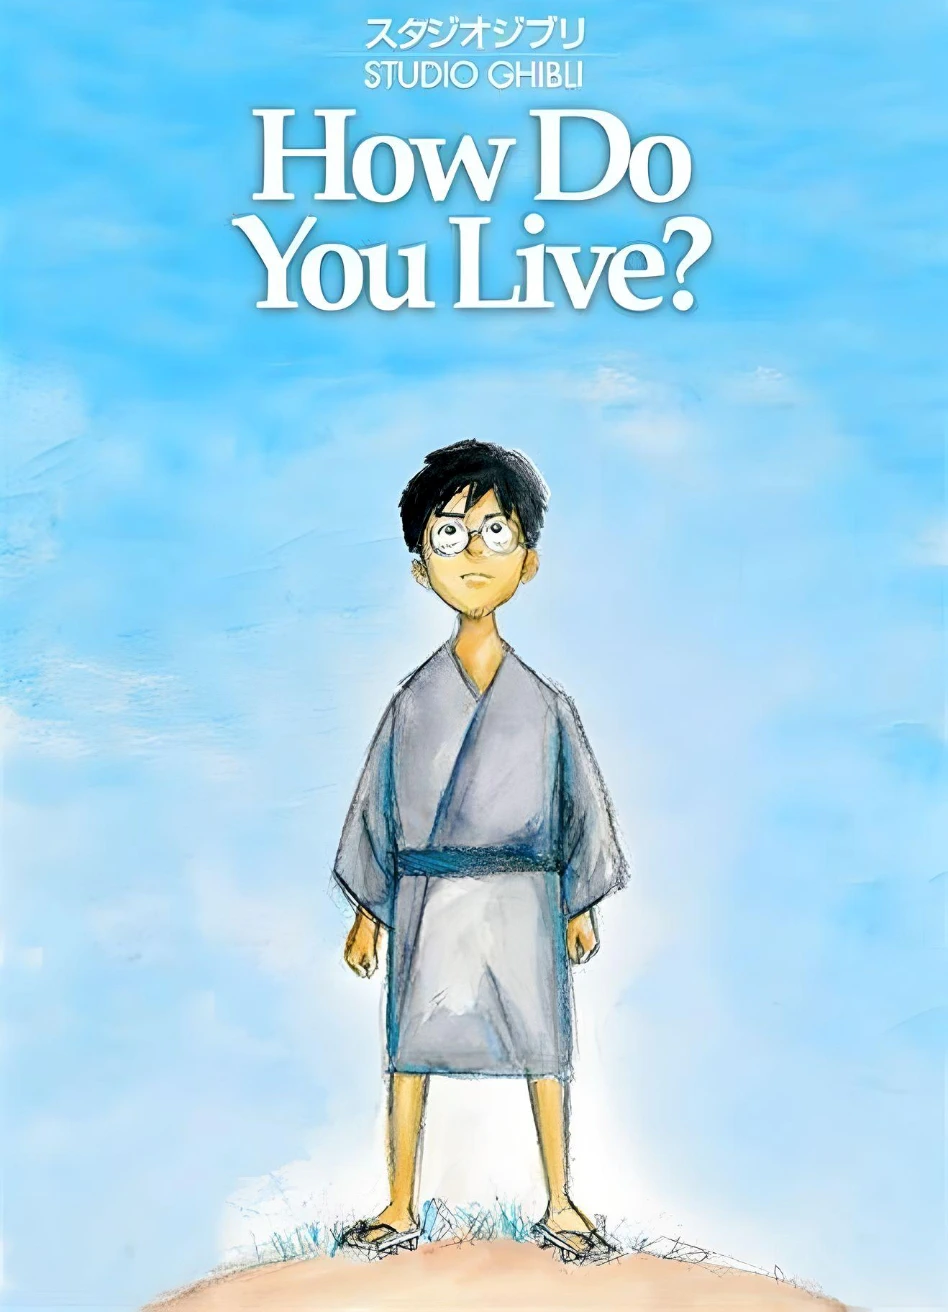 Legendary Japanese Animator Hayao Miyazaki Wins a Golden Globe for film “The Boy and the Heron”